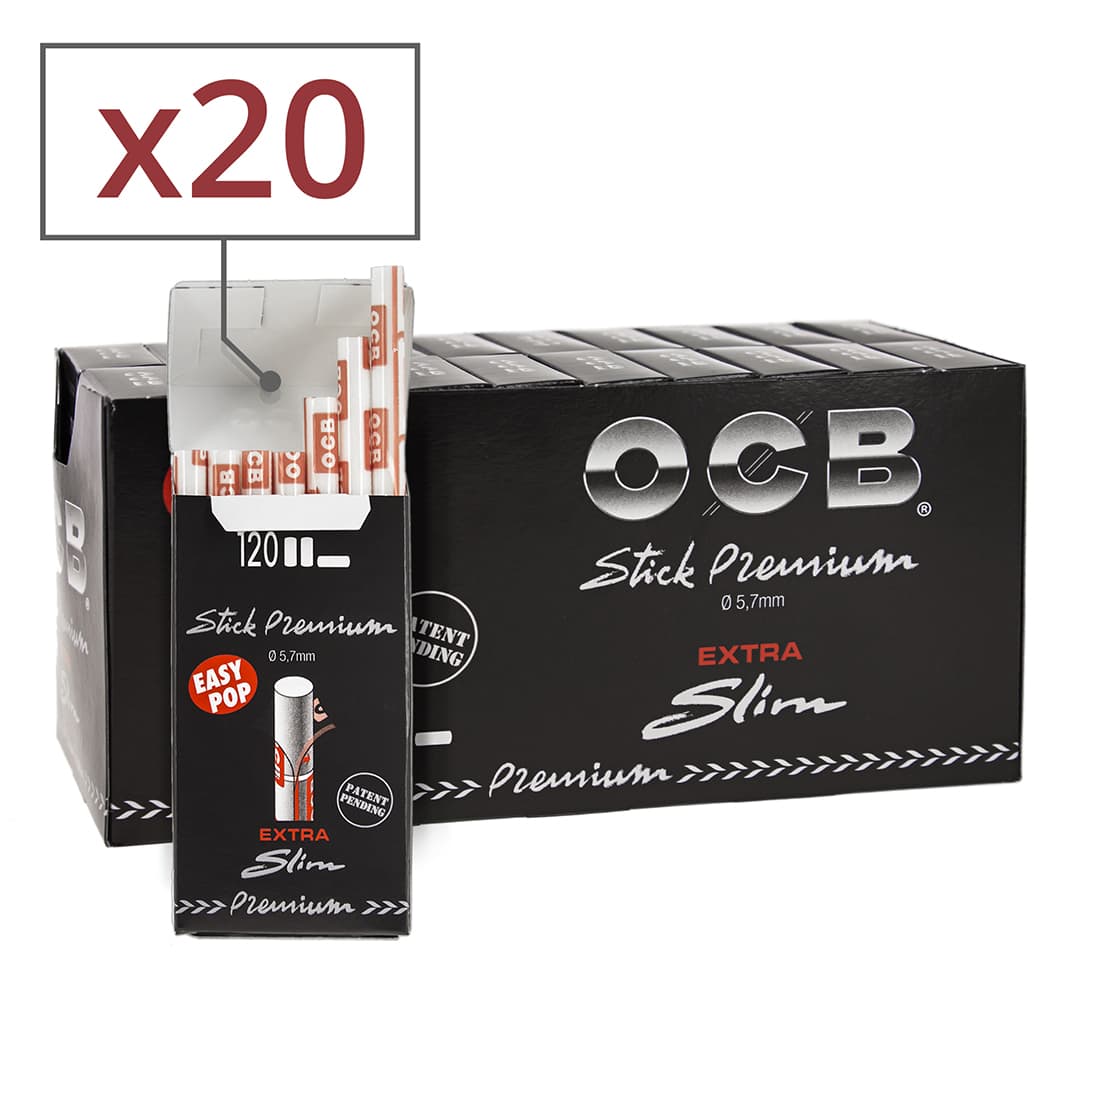 Filtres OCB Ultra Slim en sticks x20 - 16,40€